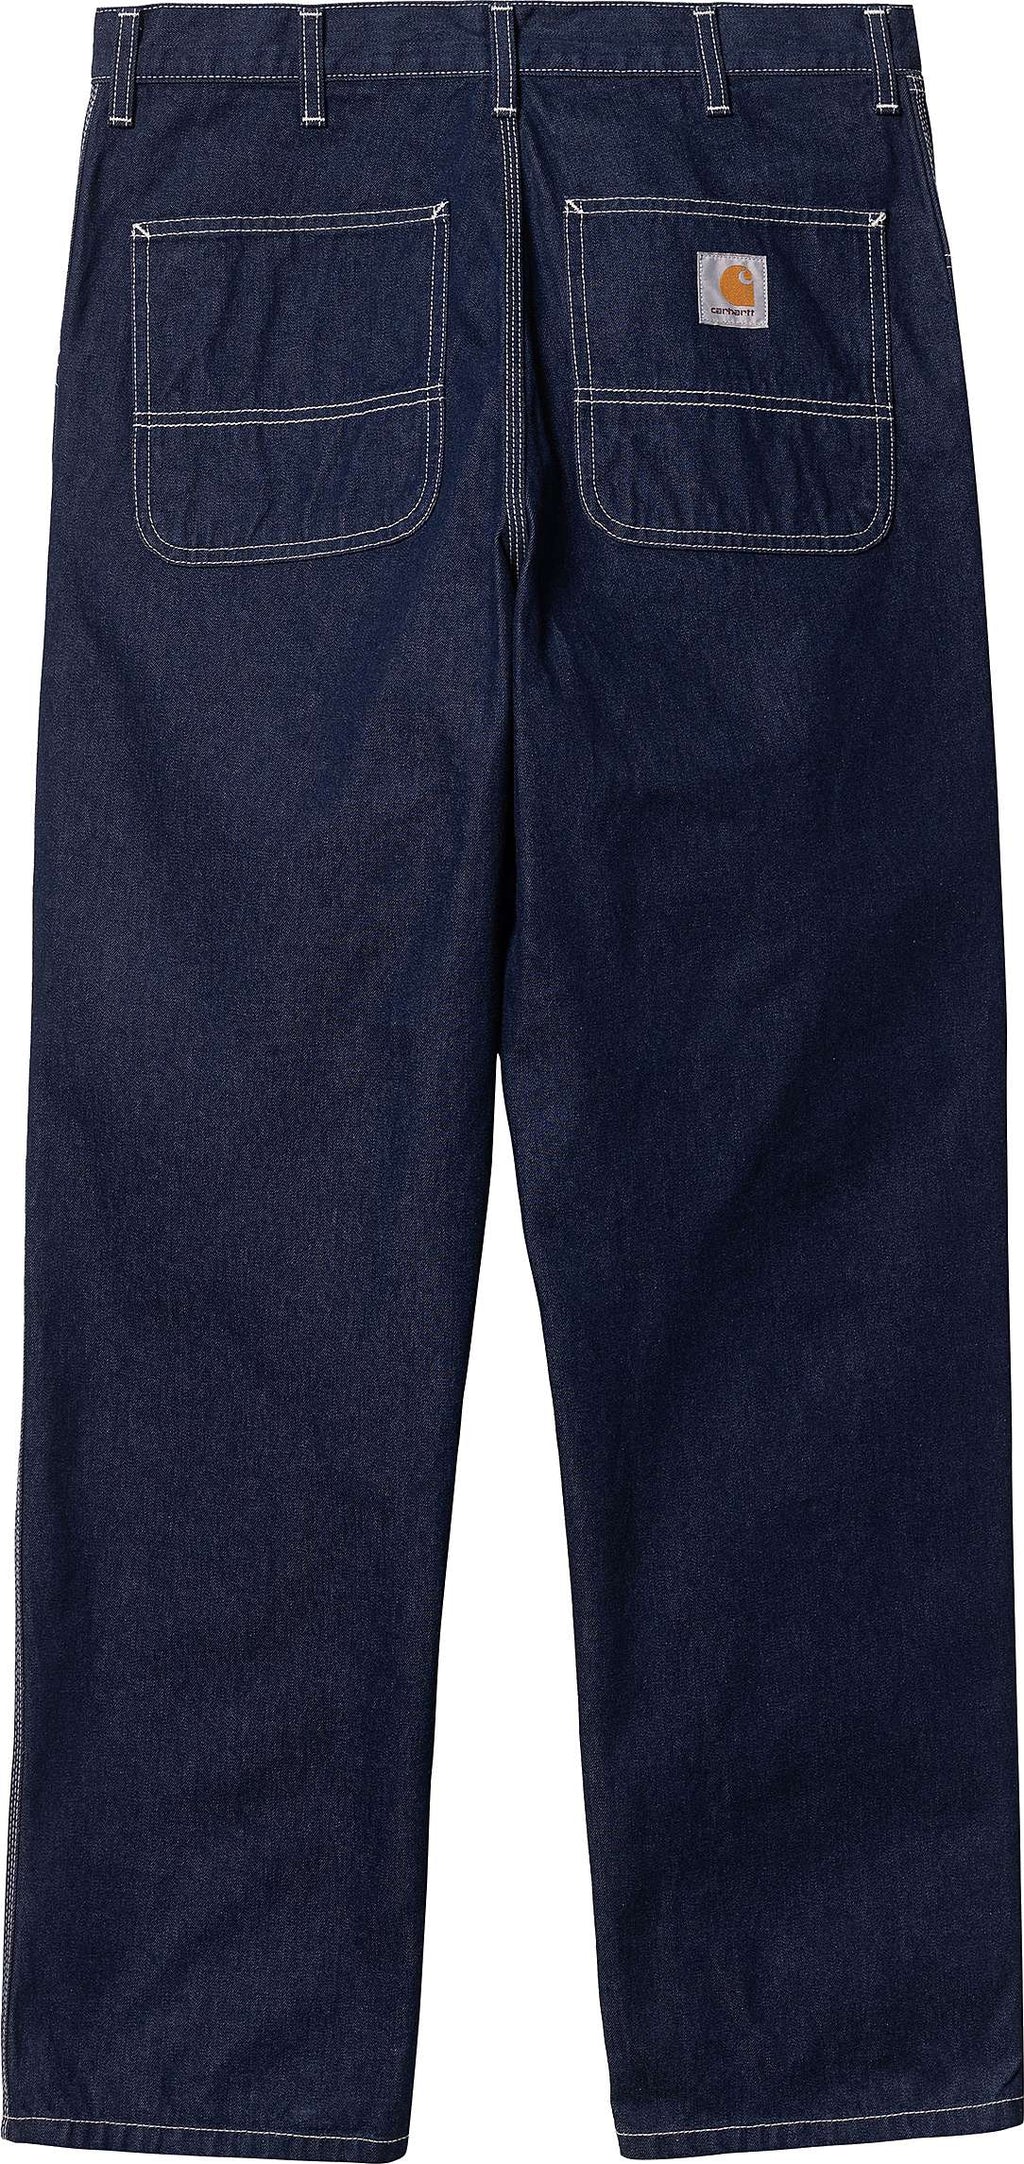  Carhartt Wip Pantaloni Jeans Simple Pant Blue One Wash Uomo - 1